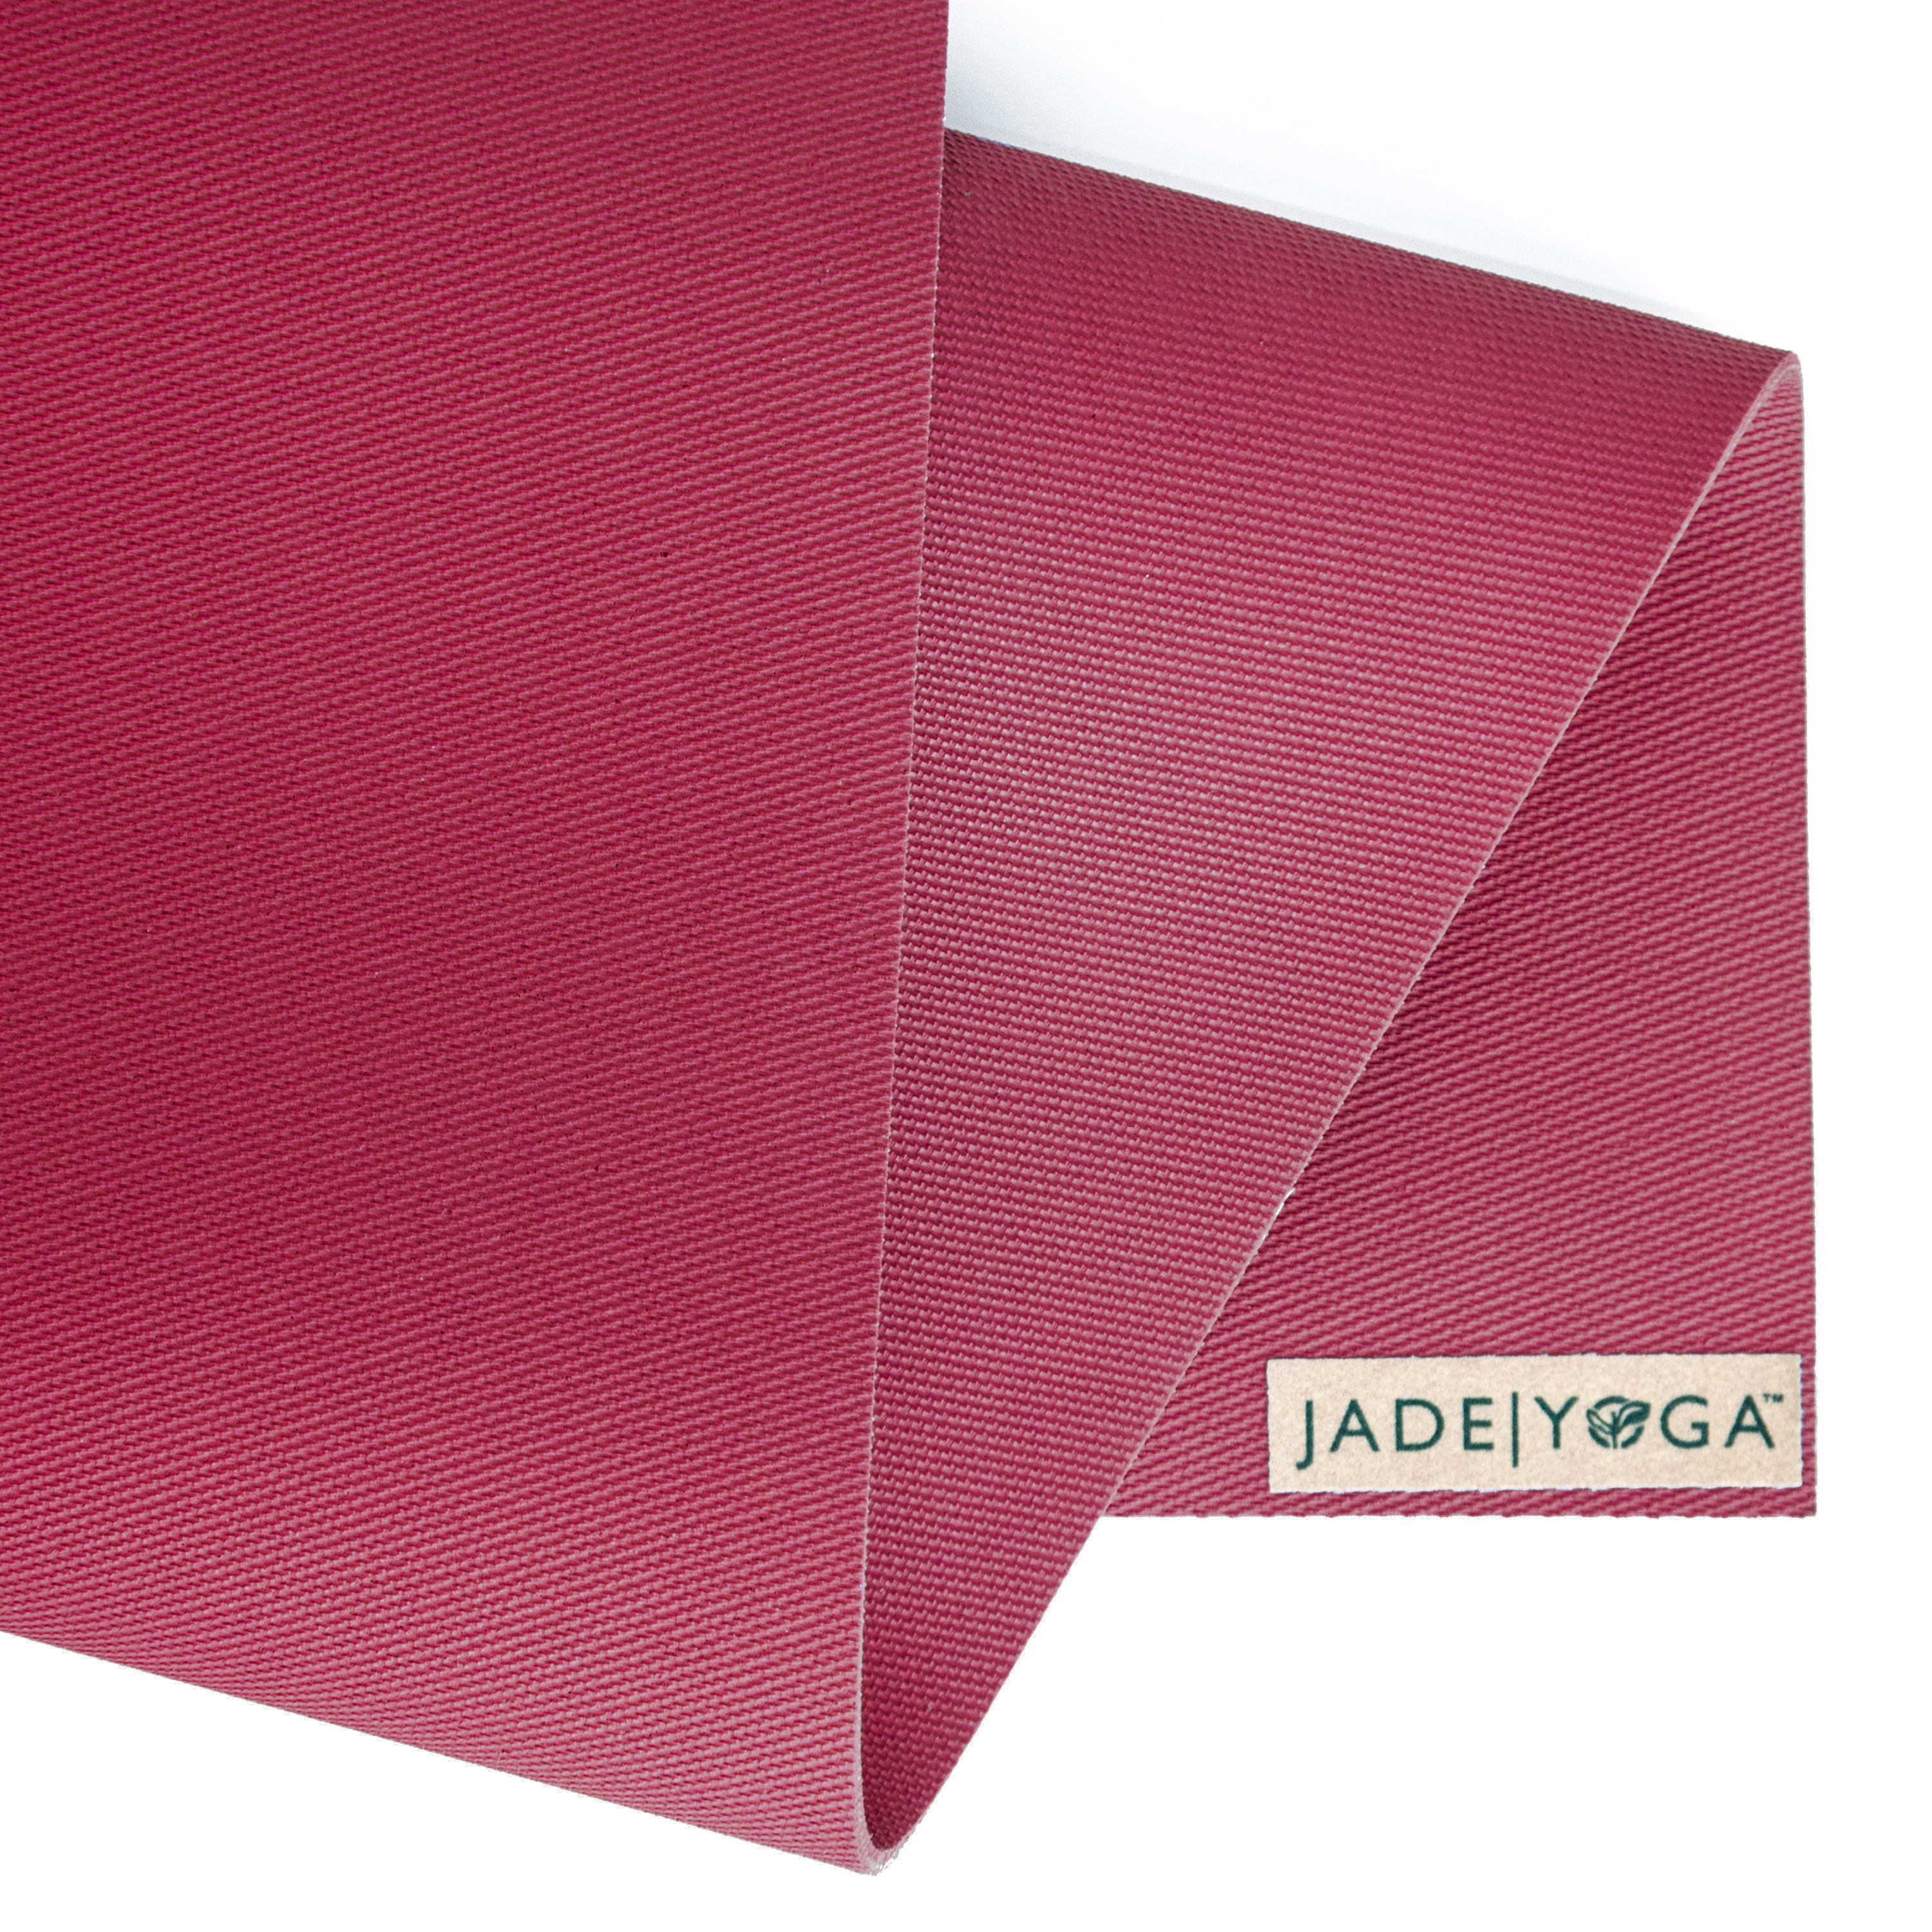 JadeYoga Harmony Mat (3/16" thick) Raspberry 68" - image 2 of 2